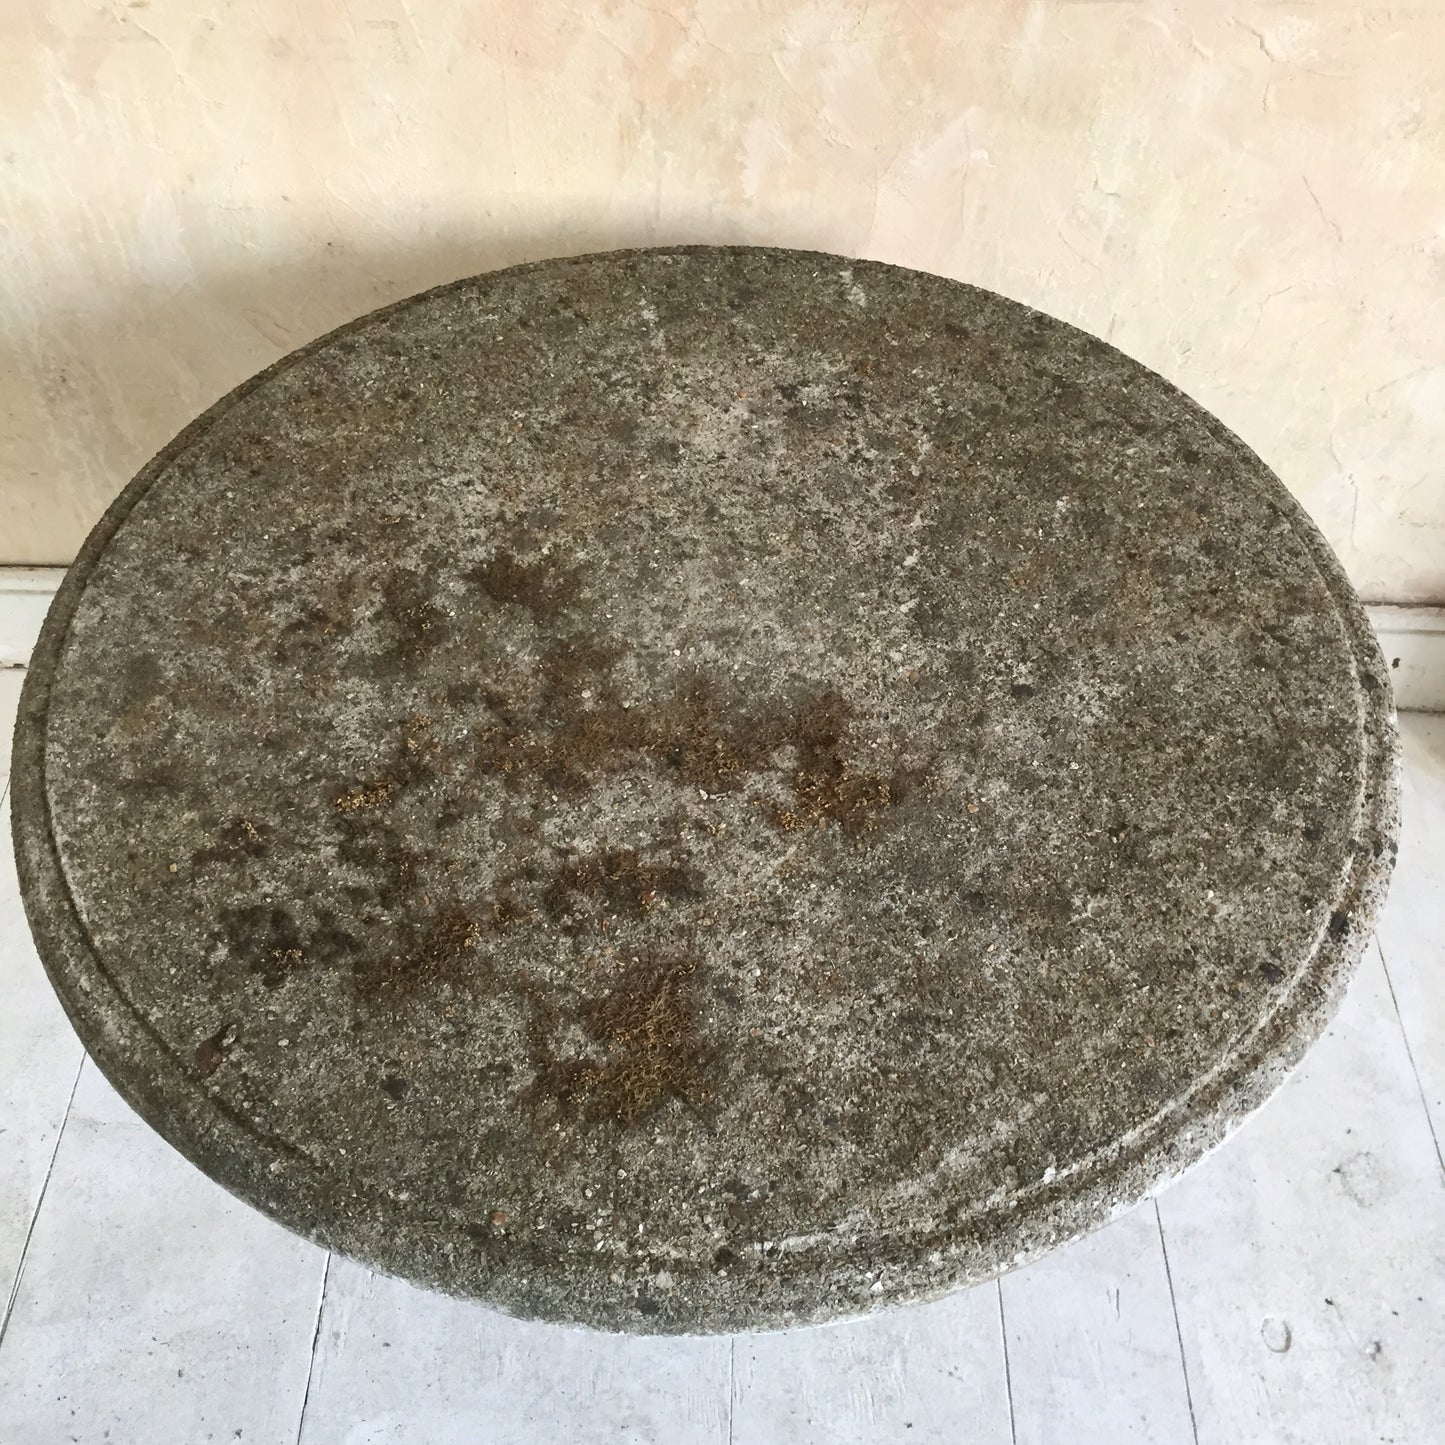 Composite Stone Table